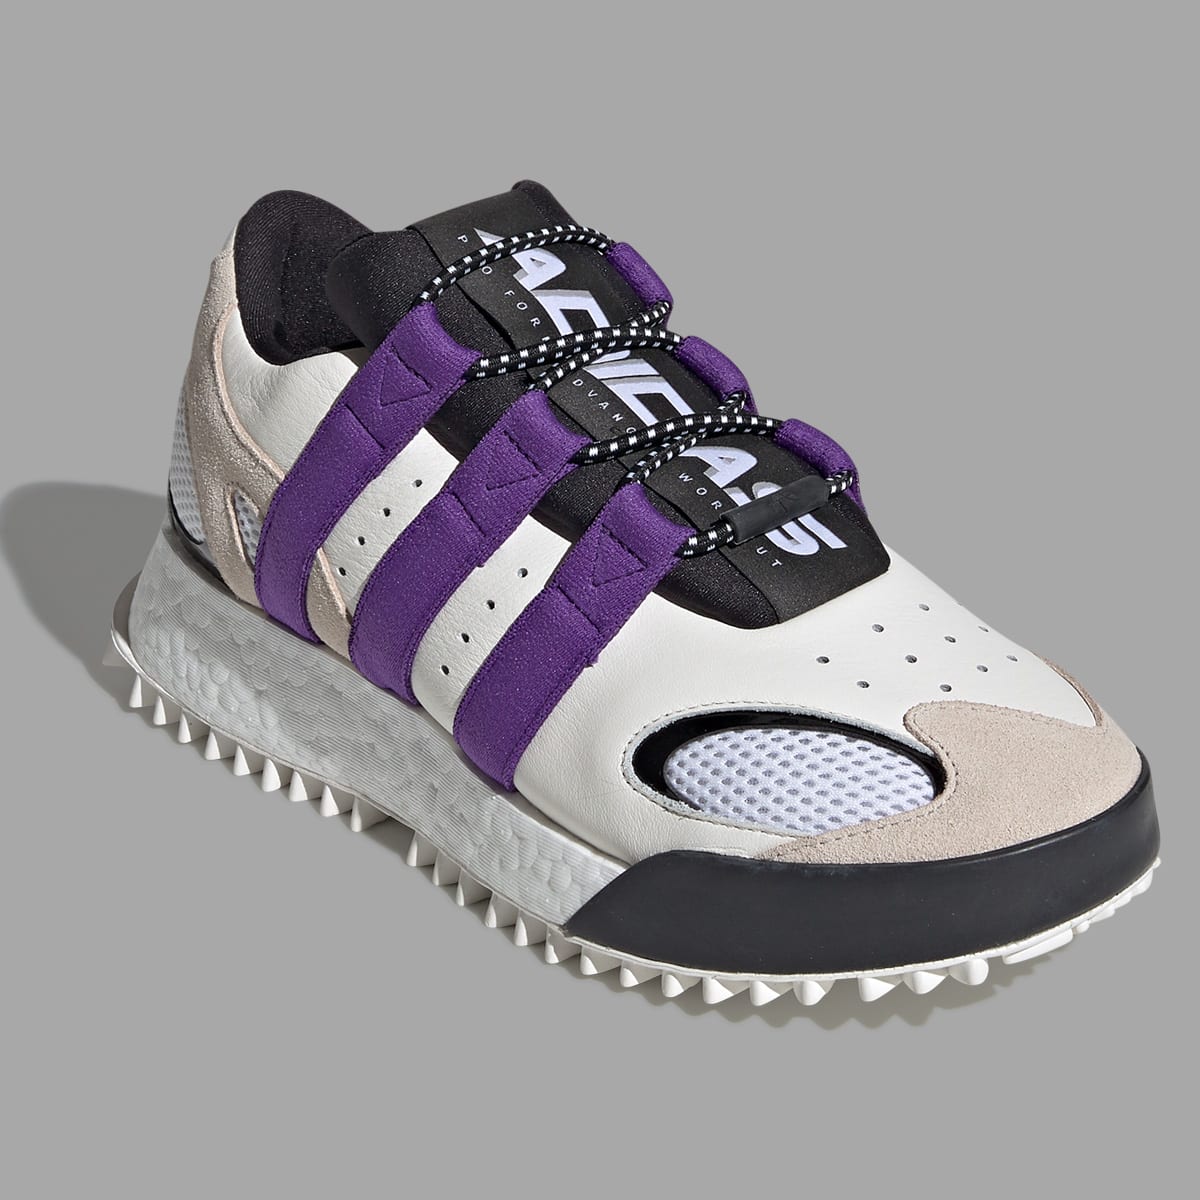 adidas aw wangbody run alexander wang white purple